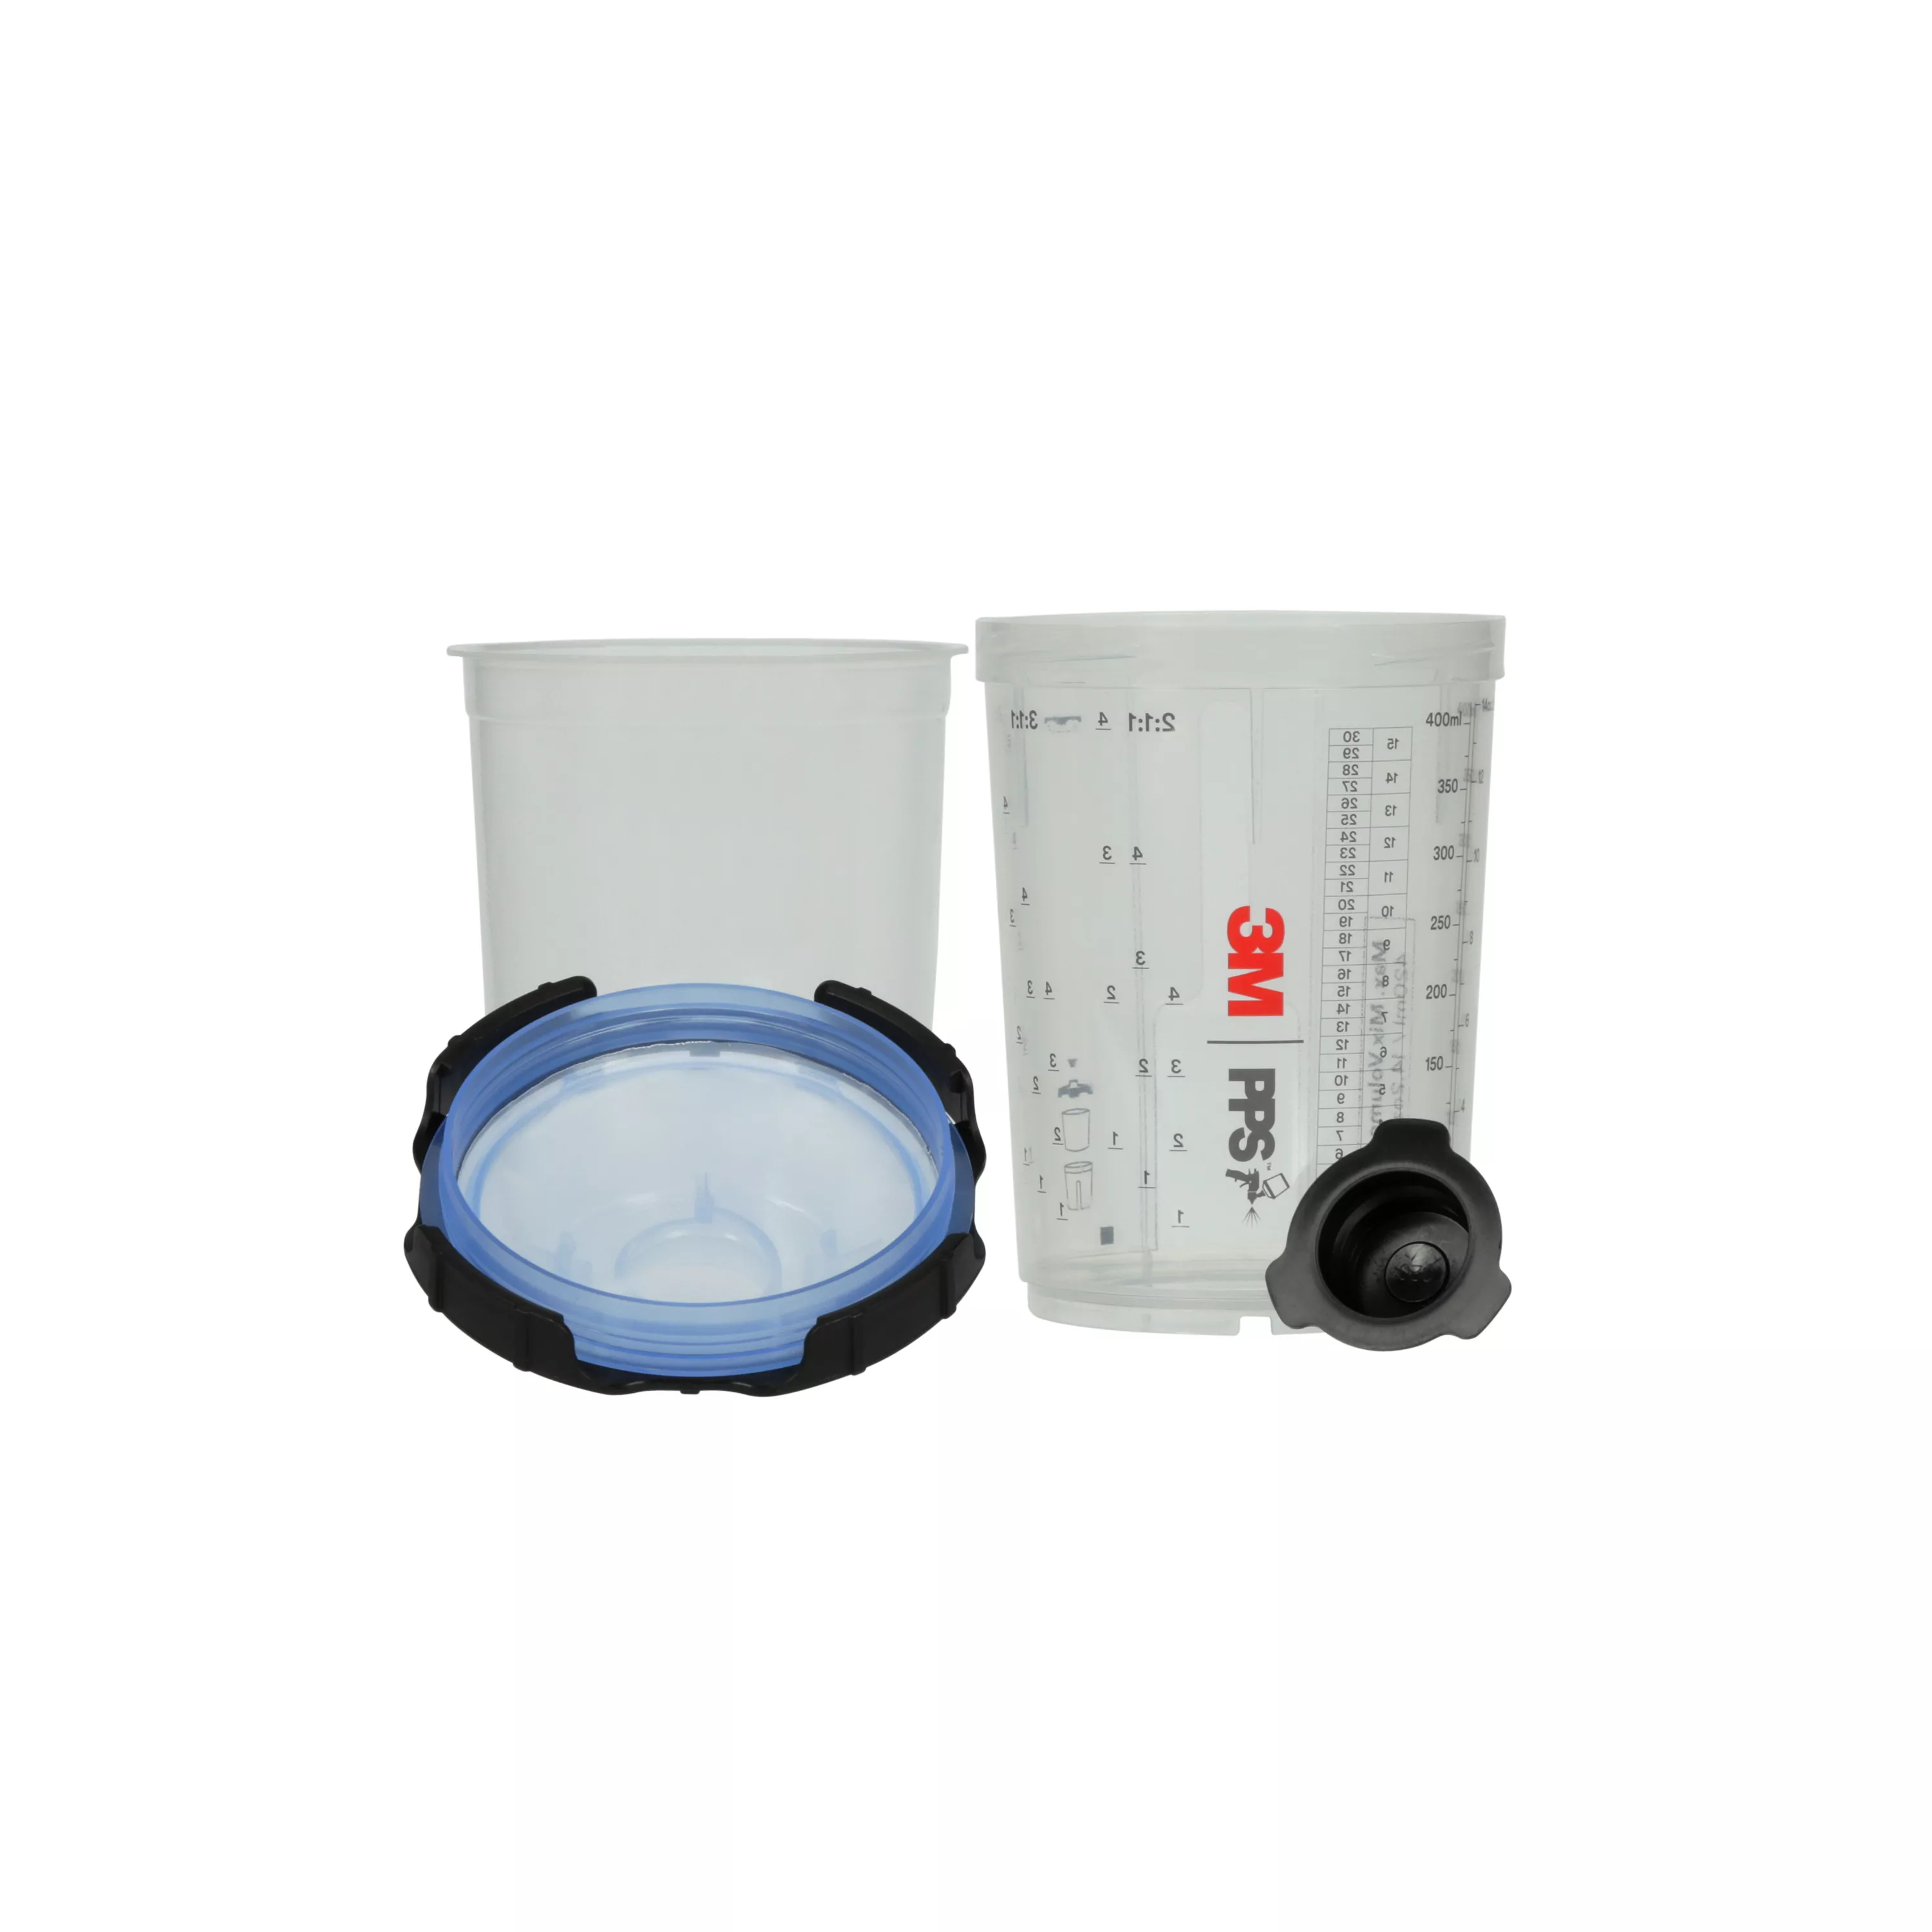 SKU 7100134646 | 3M™ PPS™ Series 2.0 Spray Cup System Kit